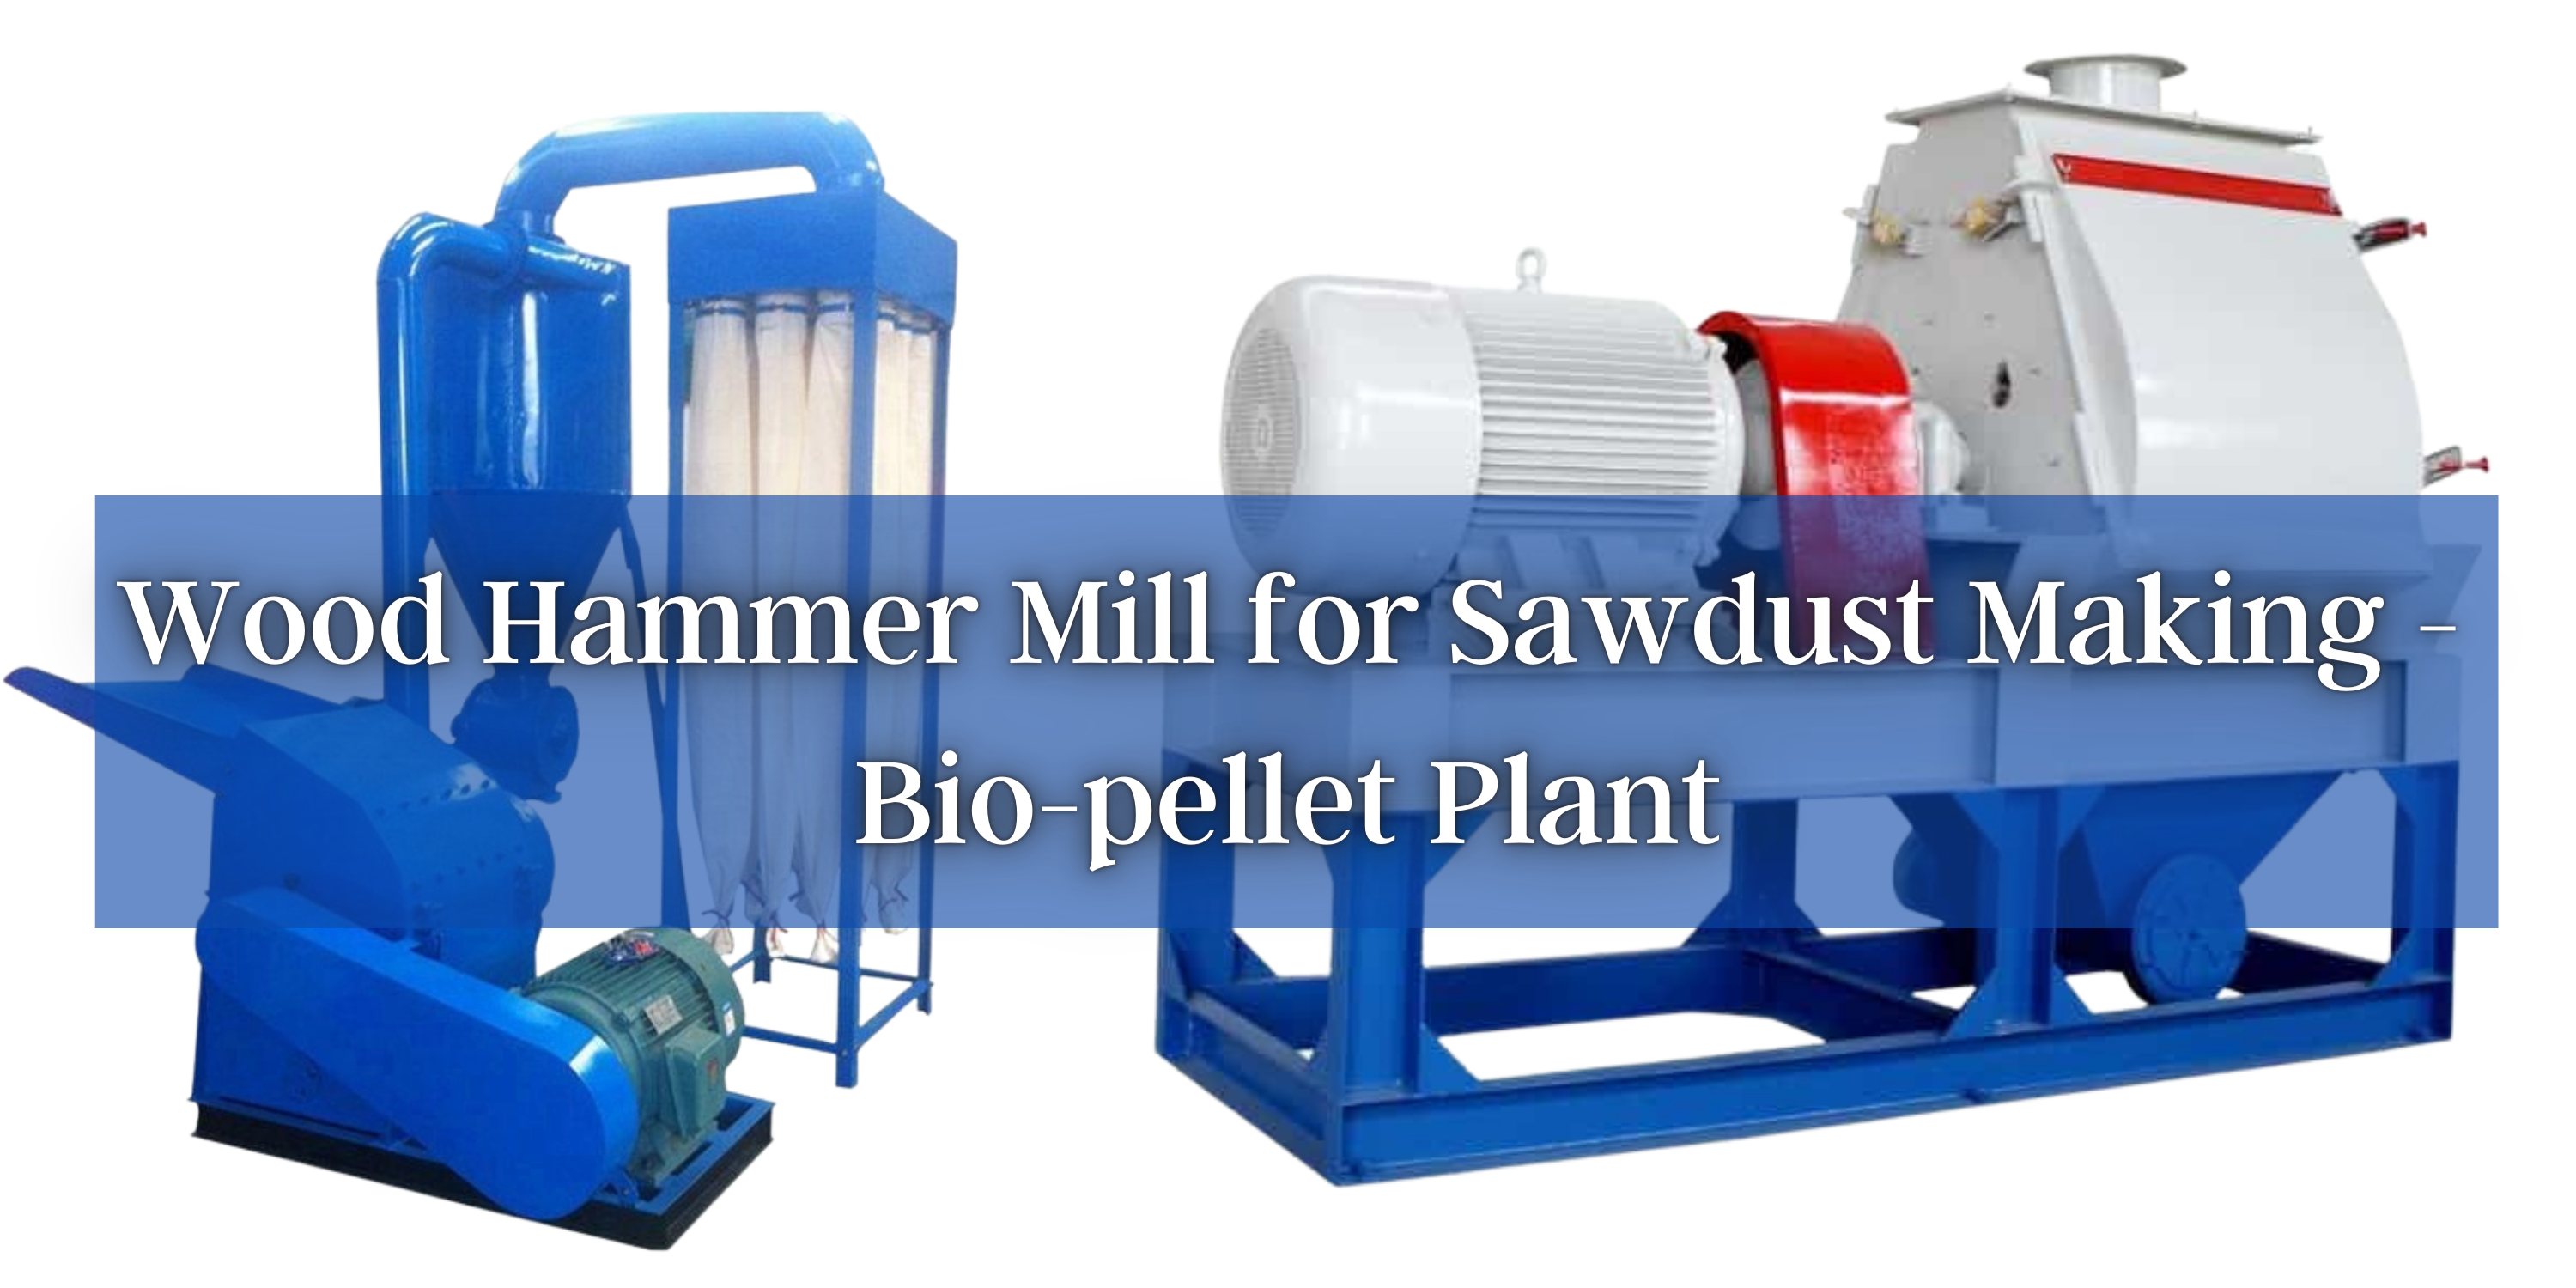 Wood Hammer Mill for Sawdust Making - Bio-pellet Plant